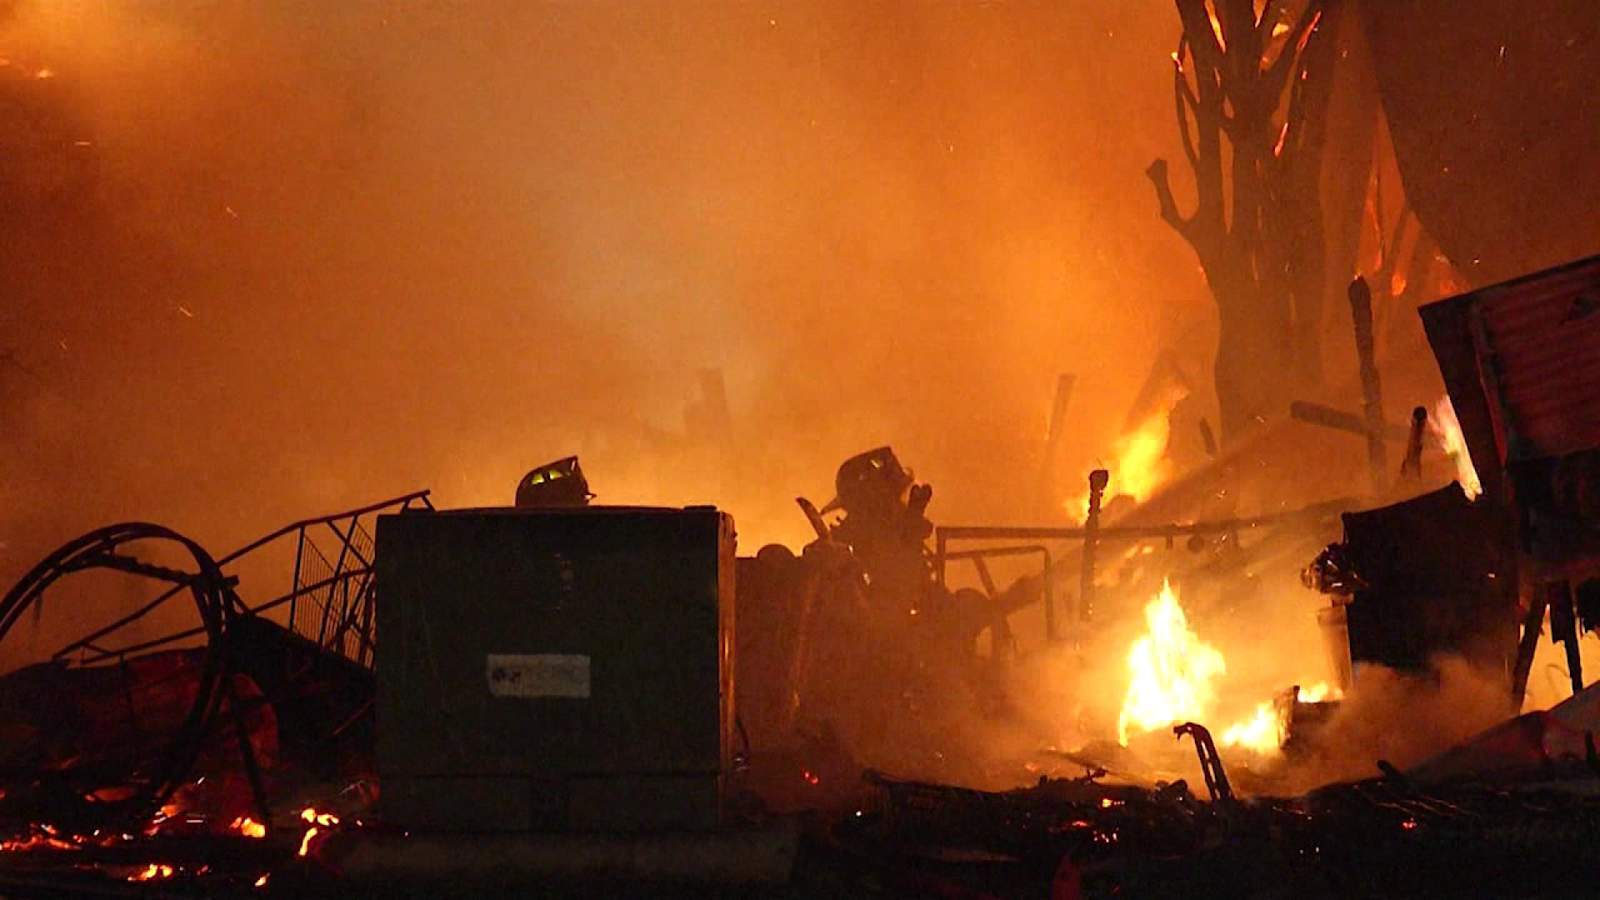 Fire destroys 2 mobile homes in NE Bexar County